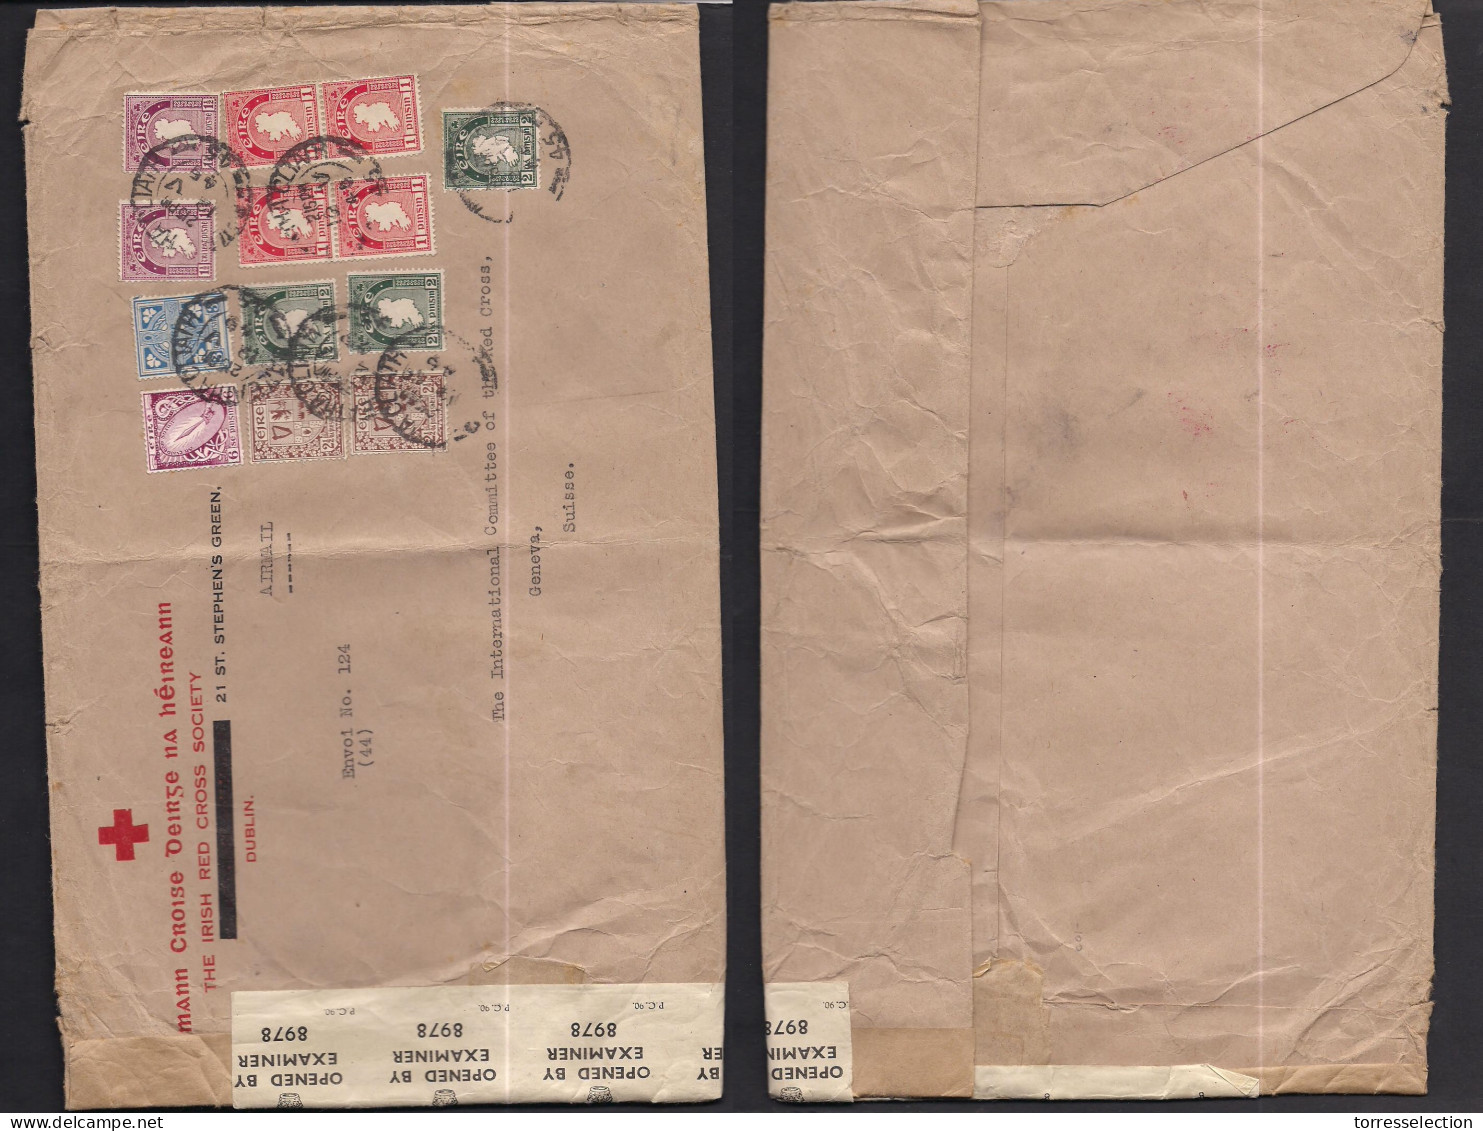 EIRE. 1945 (12 May) Dublin - Switzerland, Geneve. Red Cross. Air Multifkd Env + British Censored. Most Appealing Fkg Usa - Gebraucht